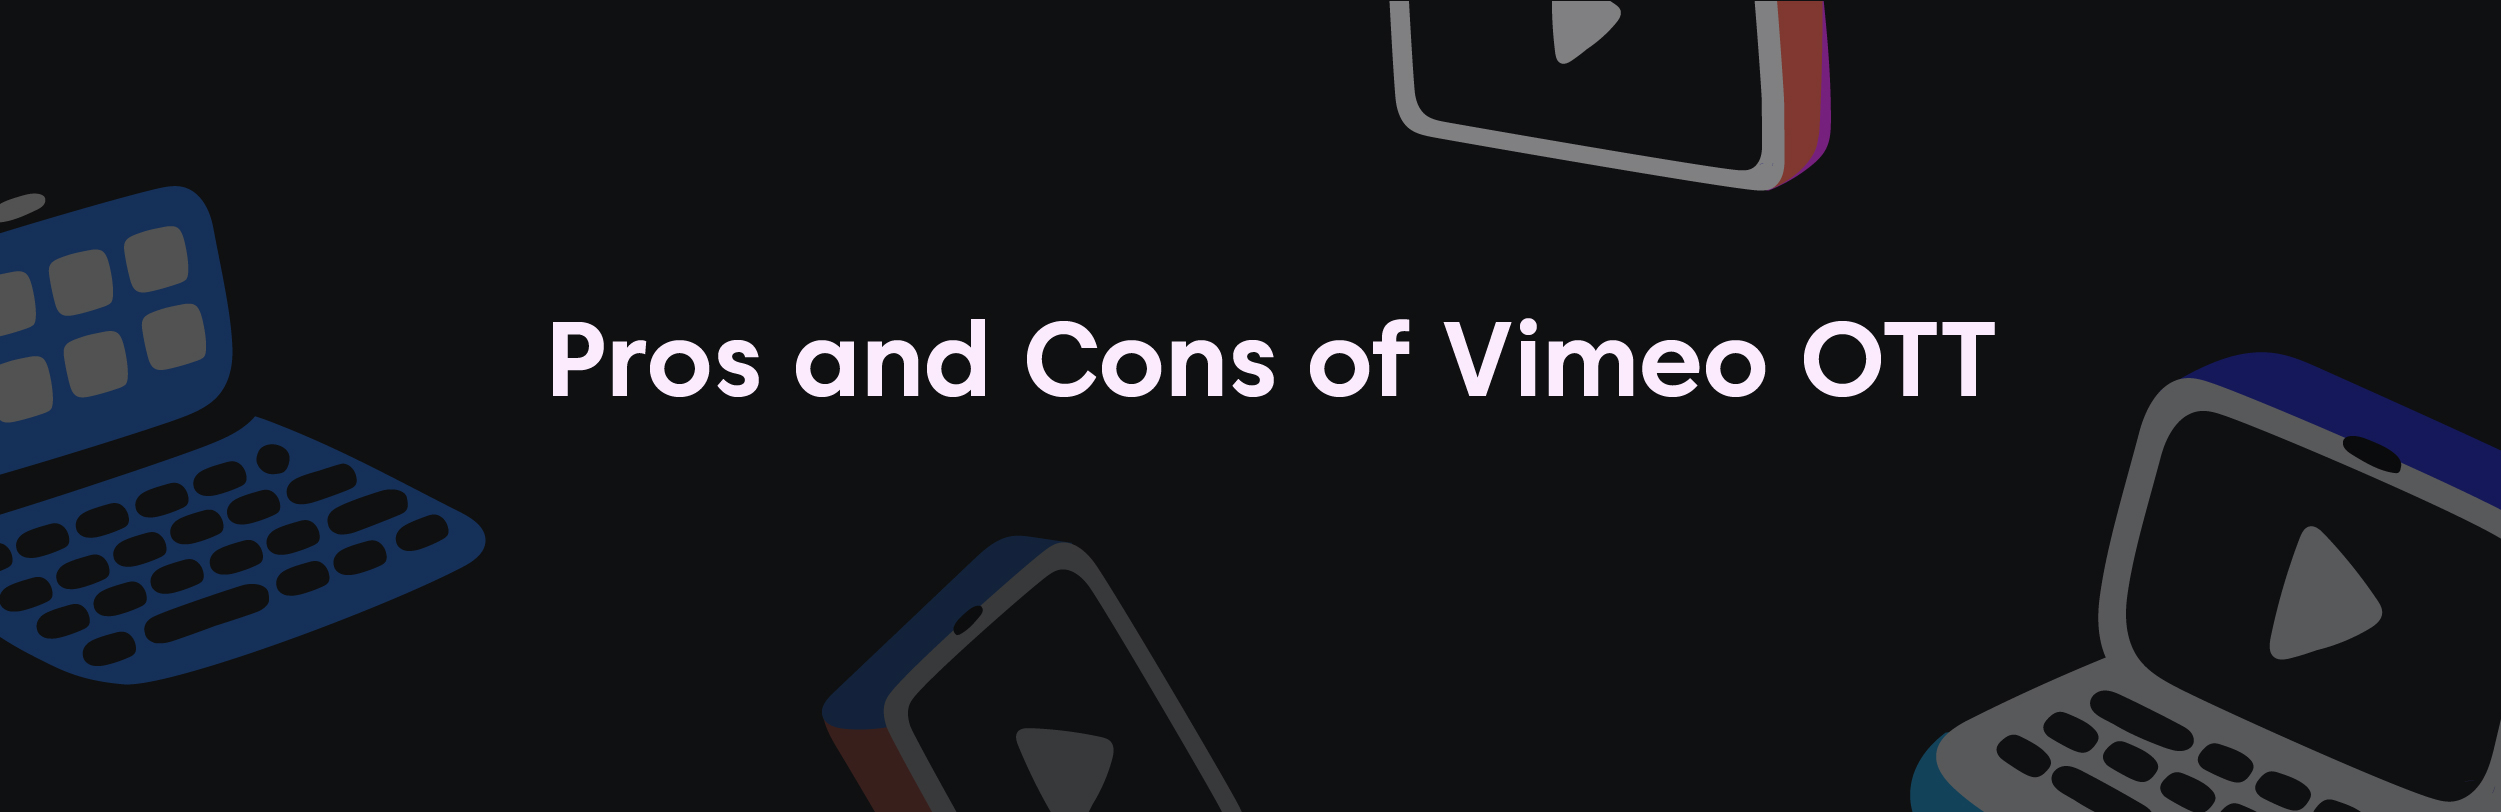 Vimeo OTT Review: Pros and Cons of Vimeo OTT